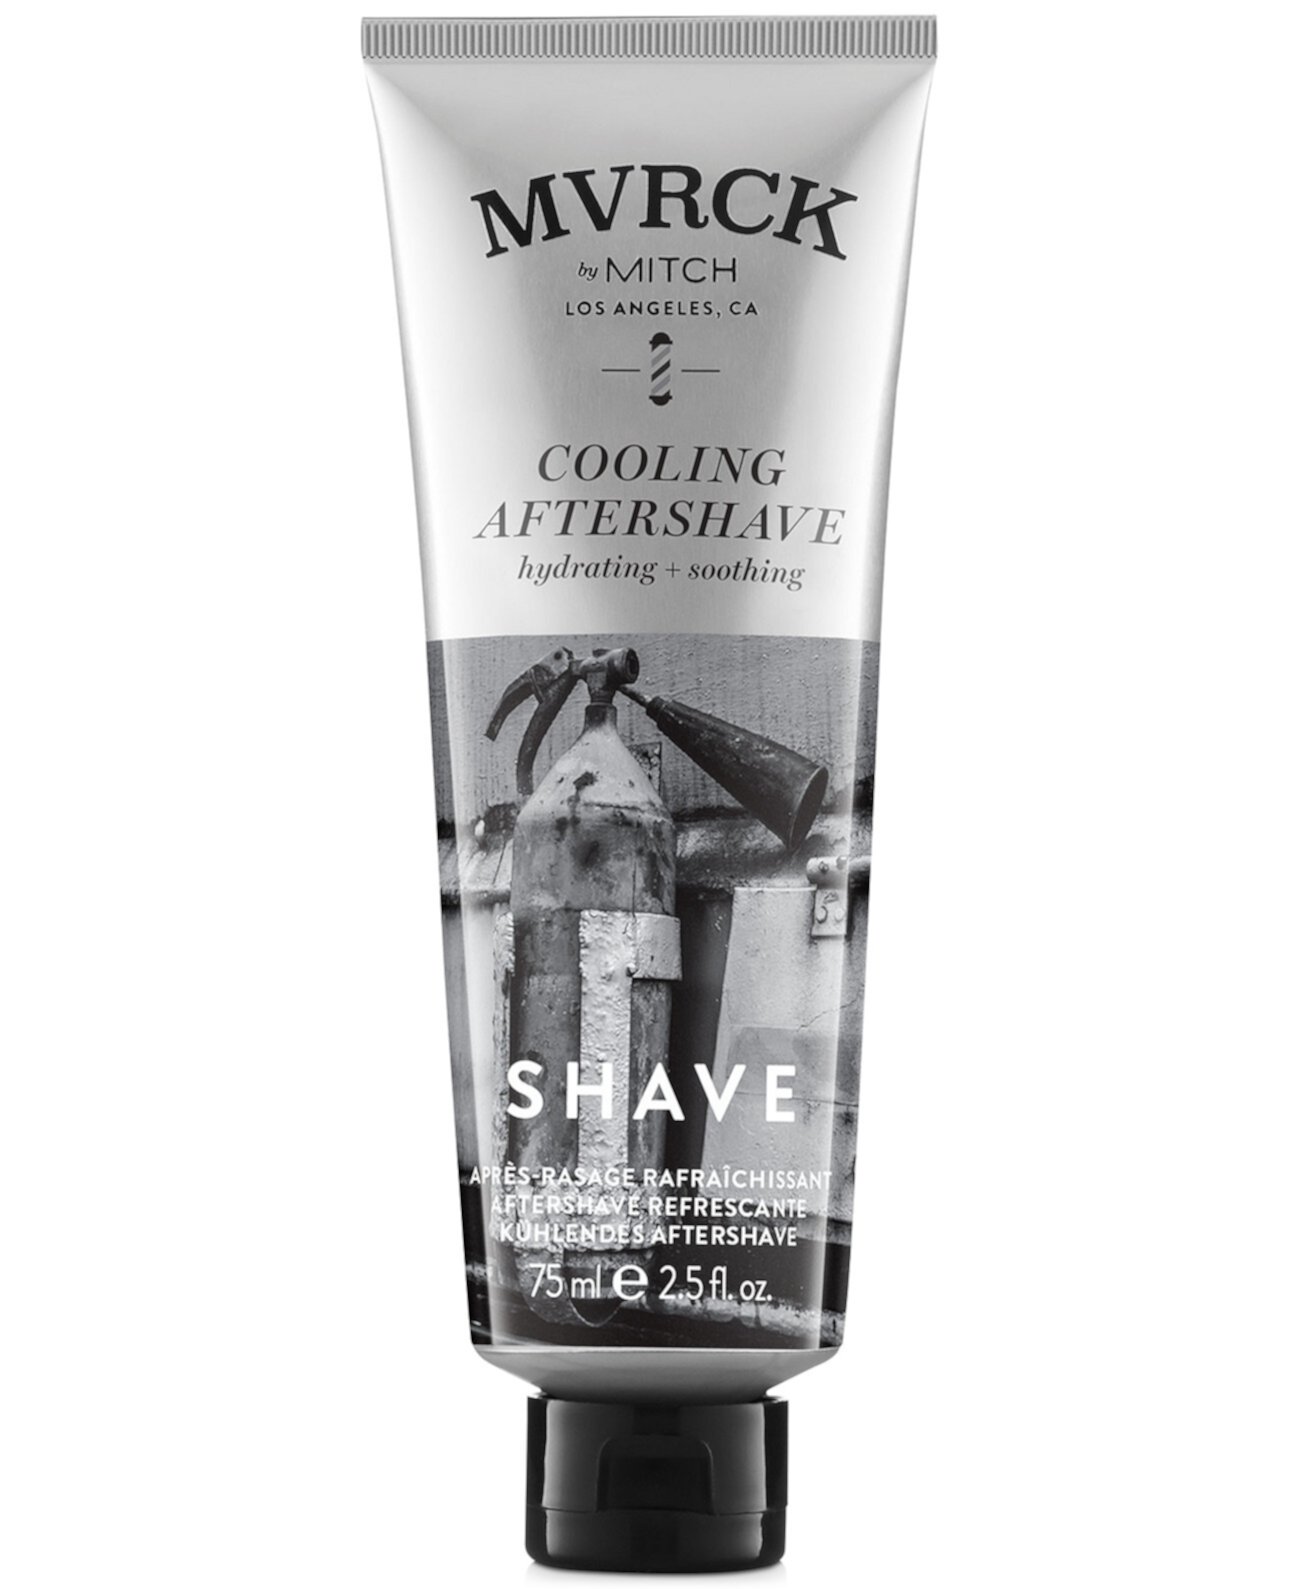 MVRCK Охлаждающее средство после бритья, 2,5 унции, от PUREBEAUTY Salon & Spa PAUL MITCHELL